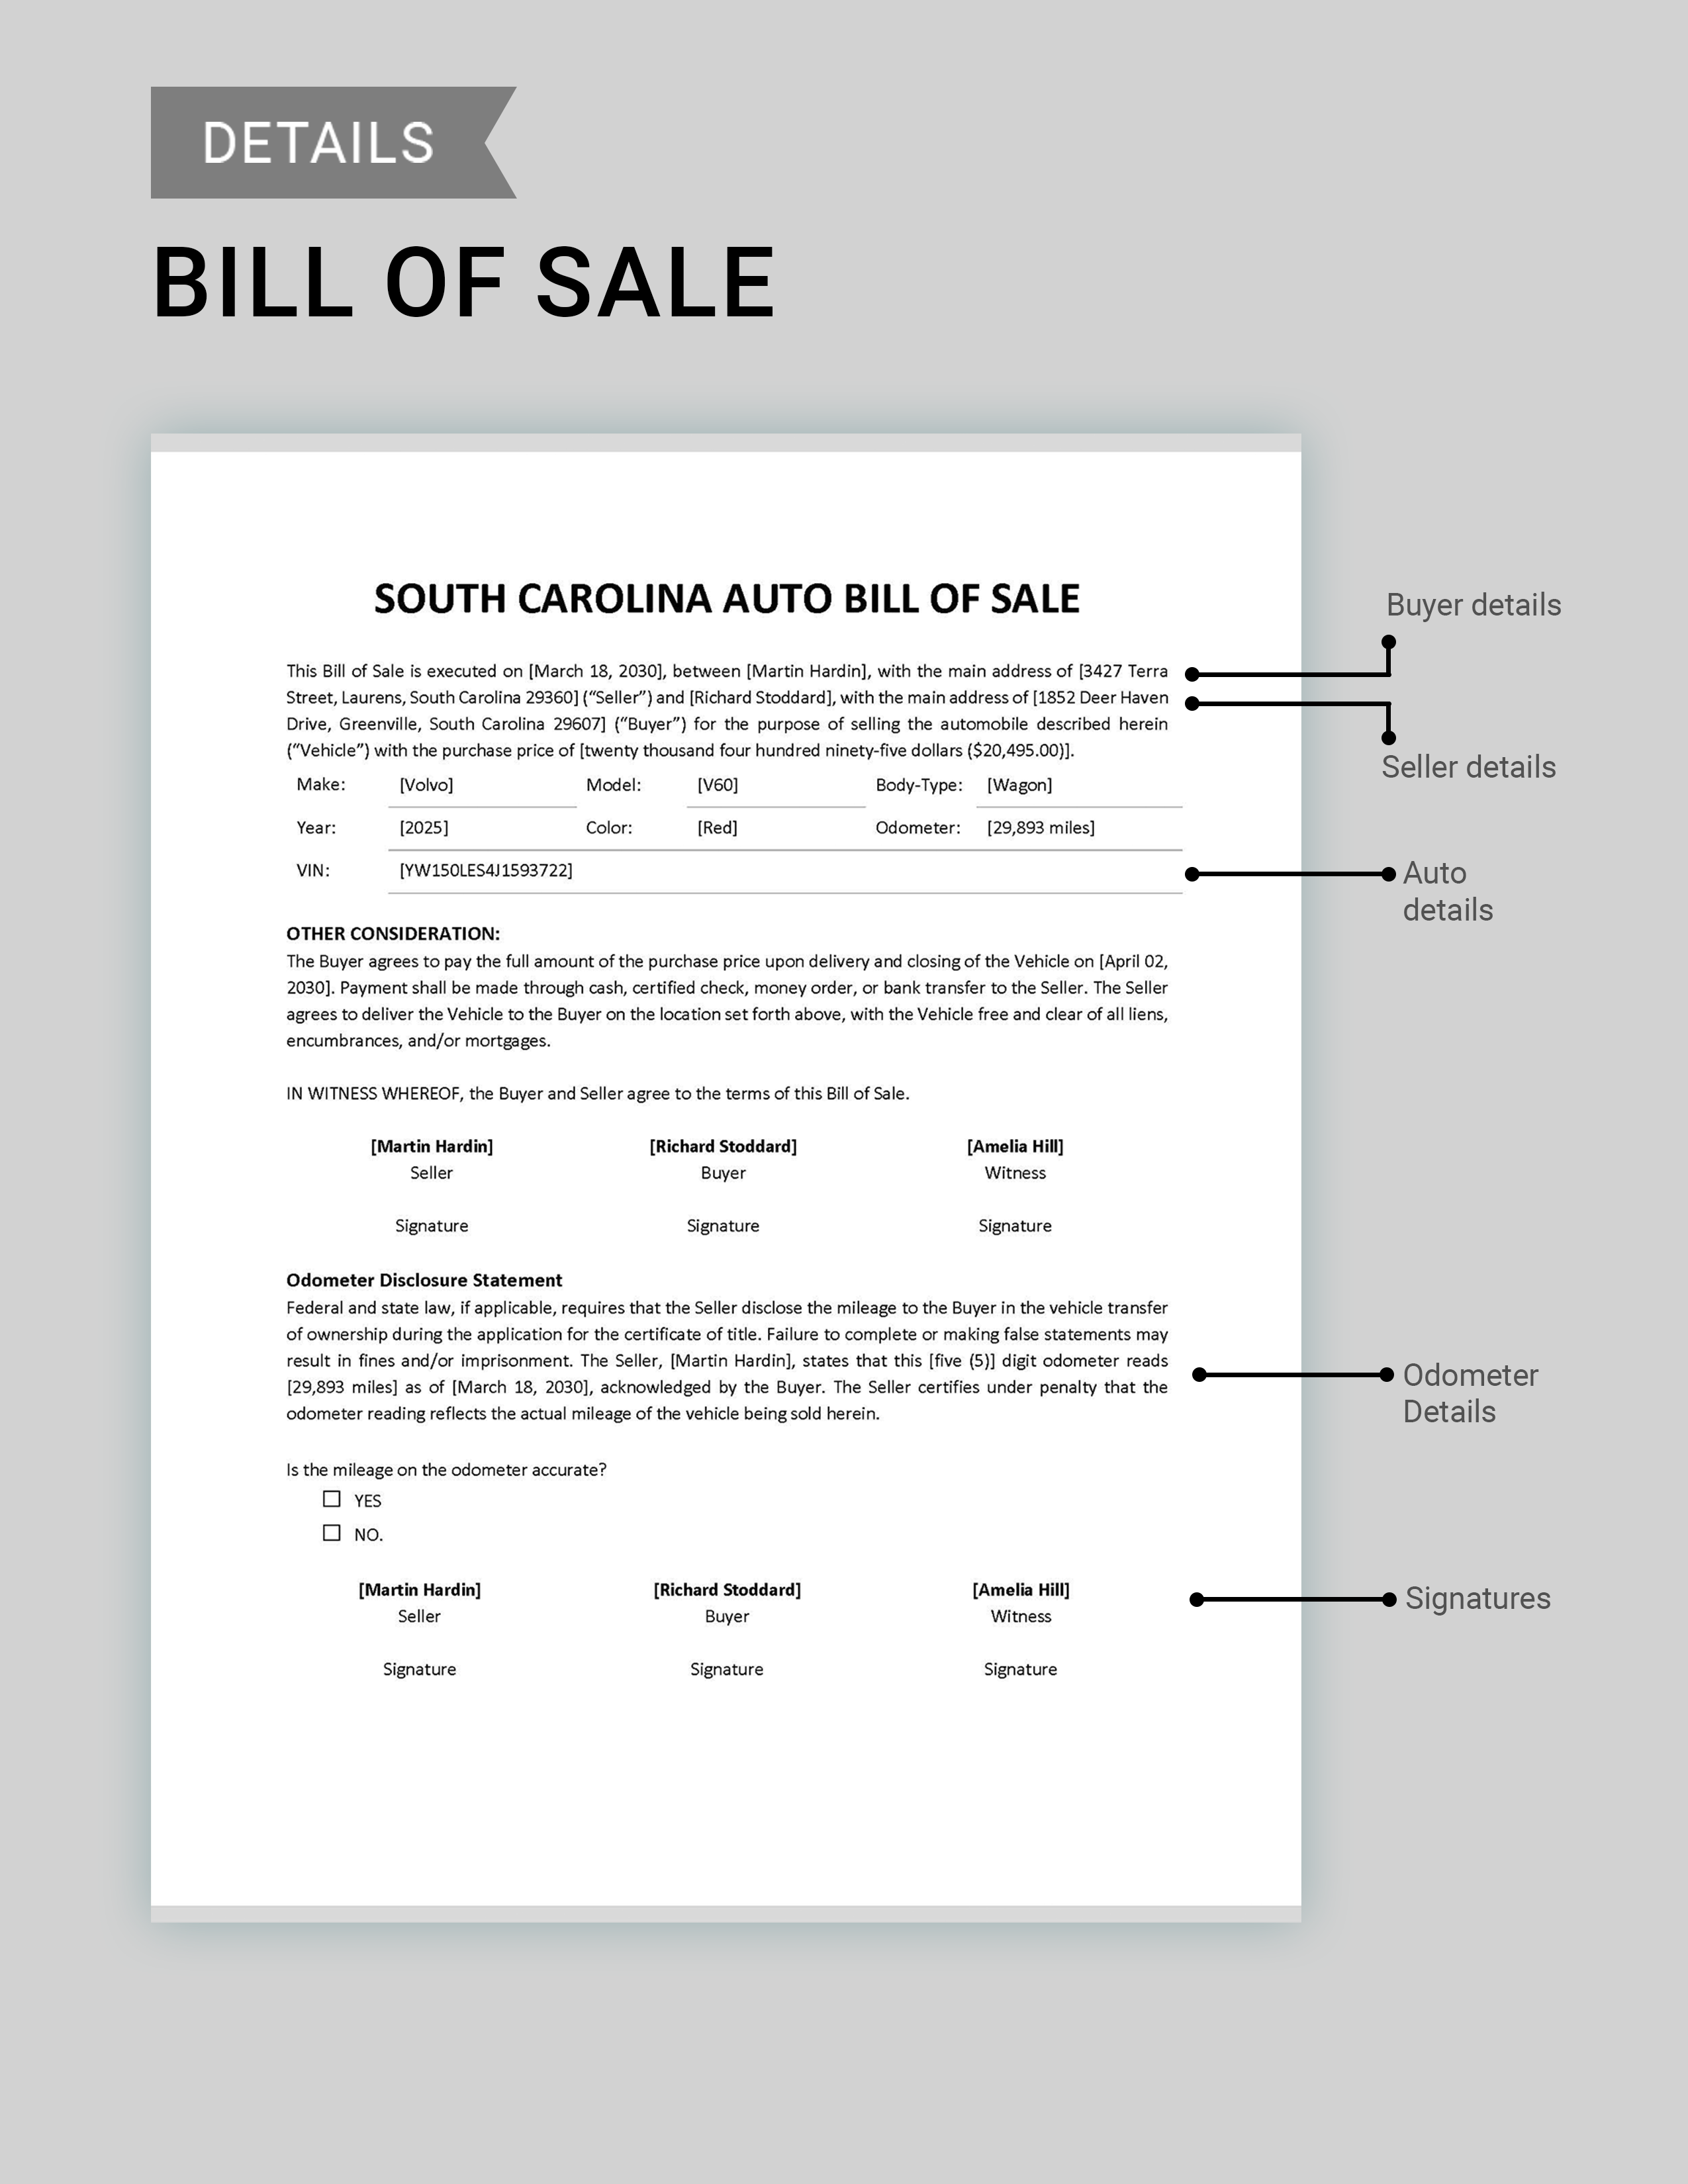 South Carolina Auto Bill of Sale Template